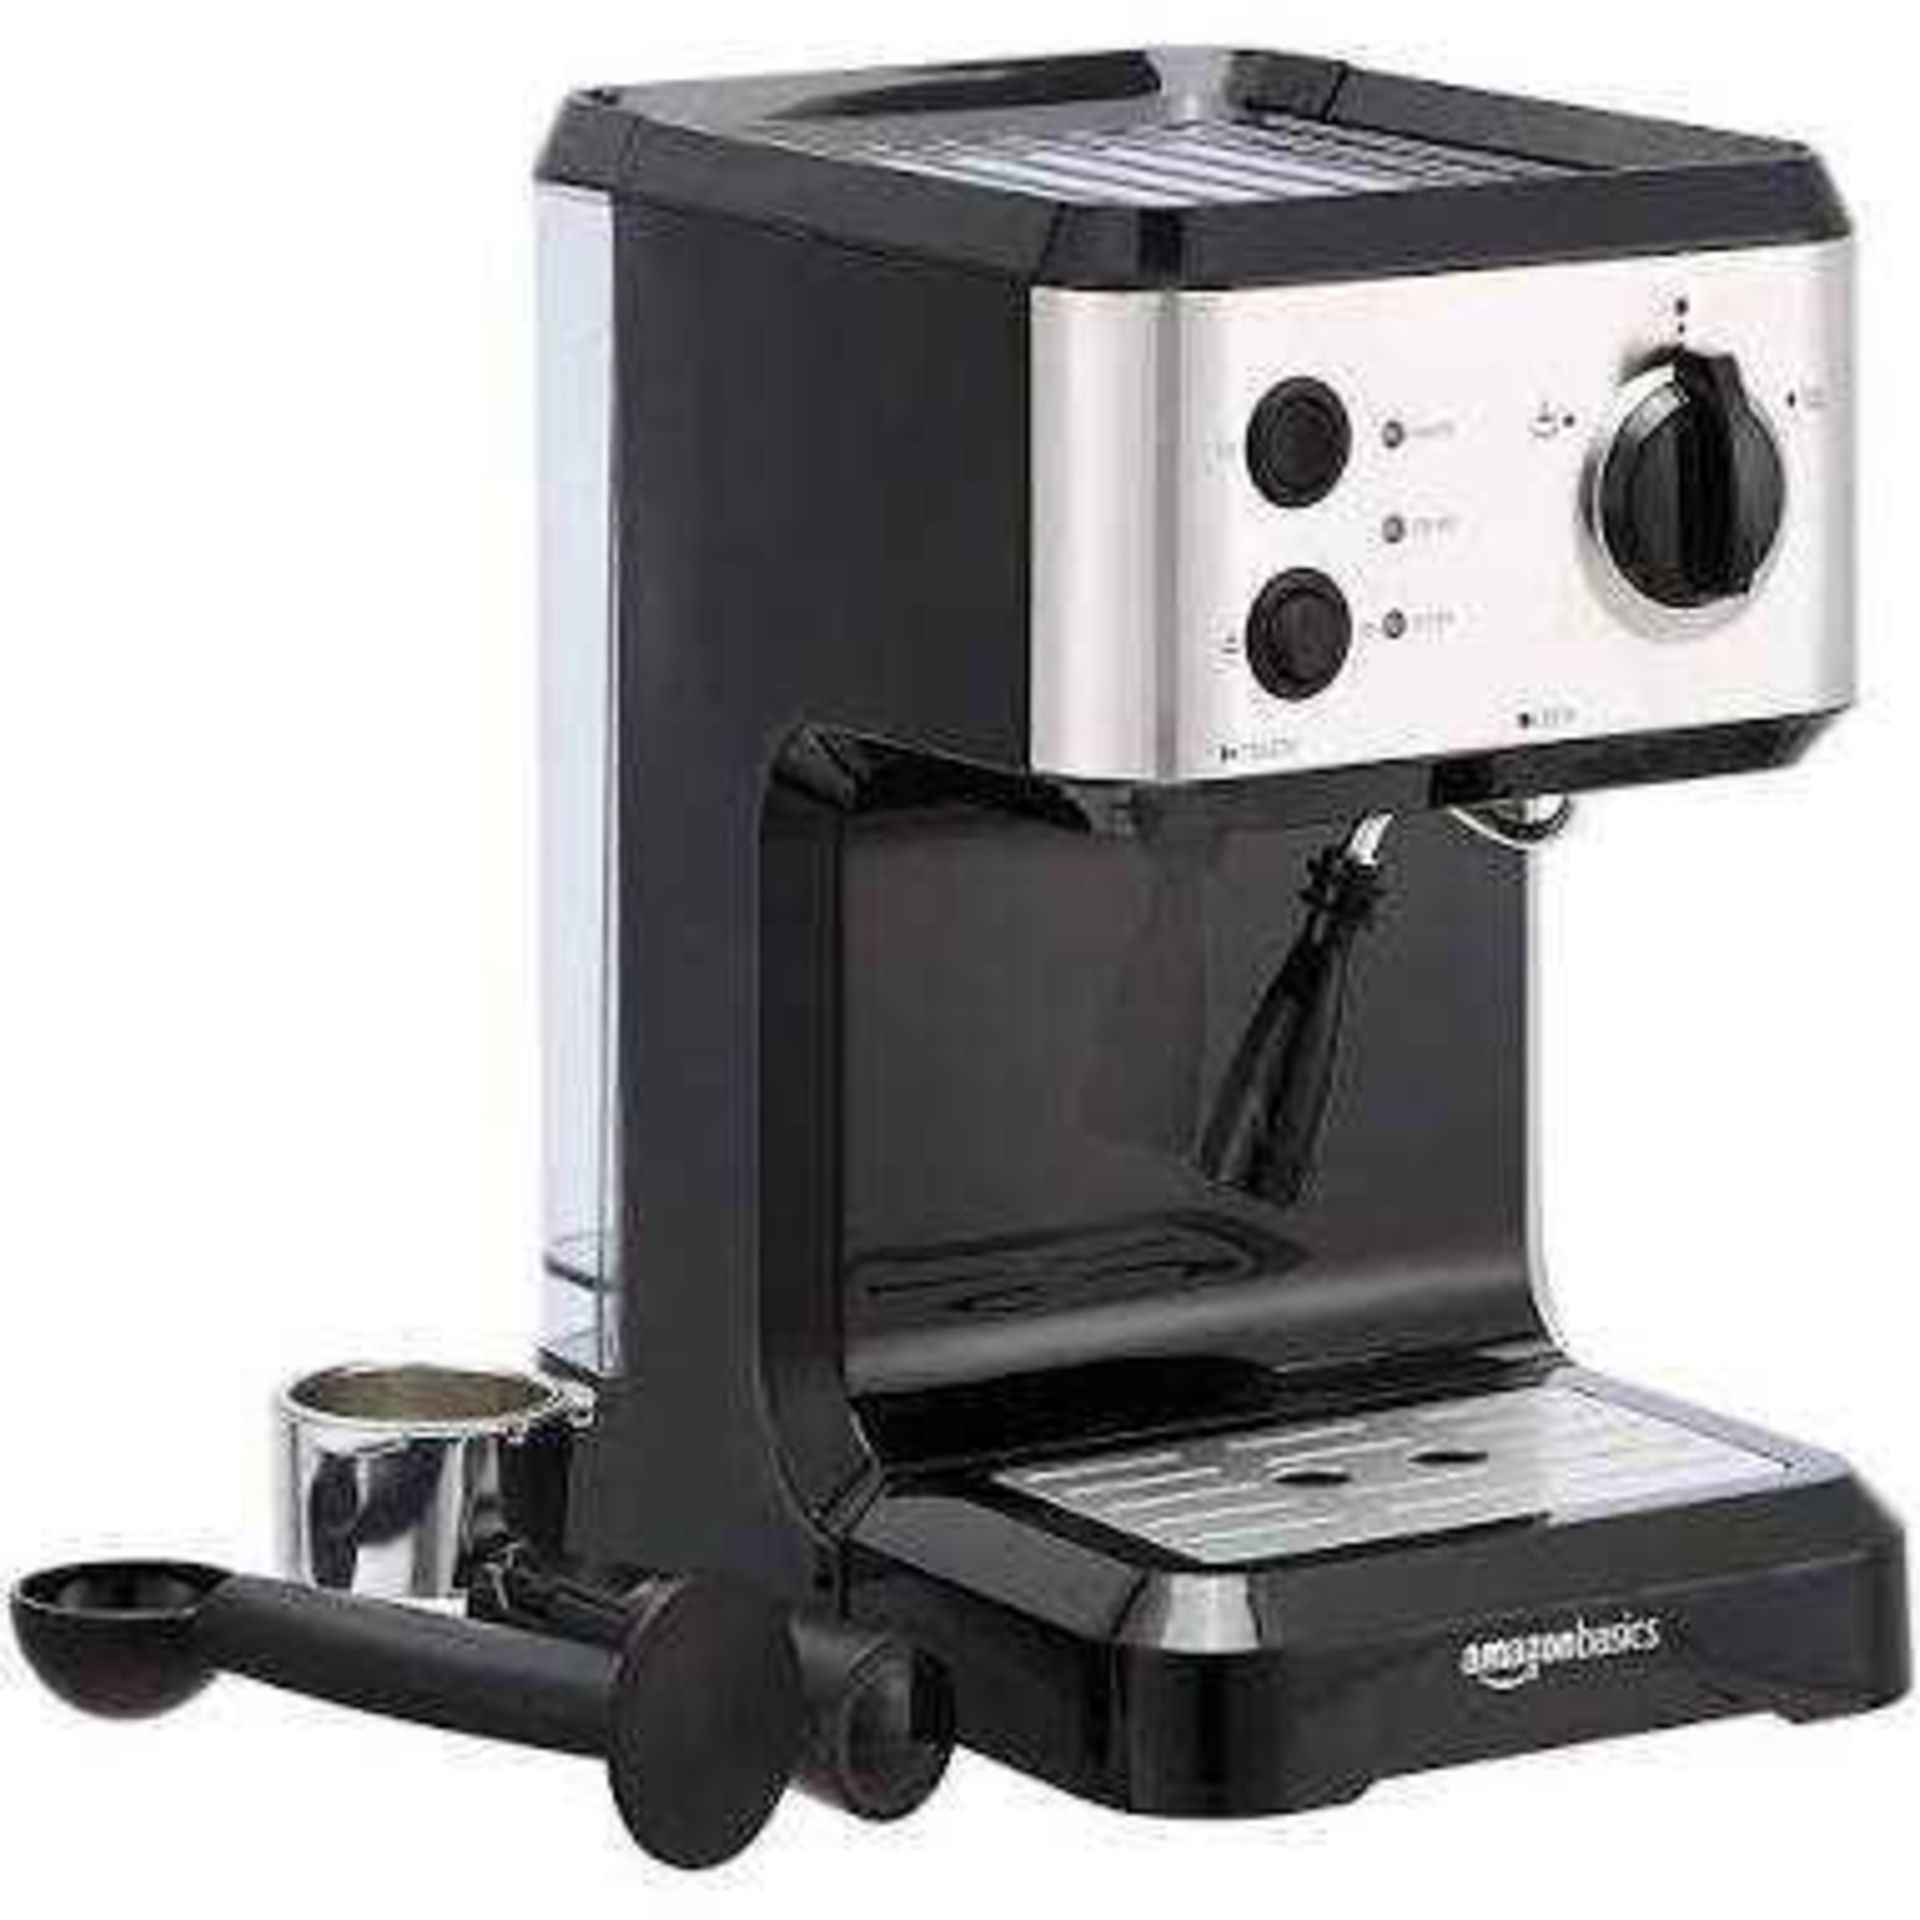 RRP £140 Brand New Factory Sealed Amazon Basics Coffee Machines